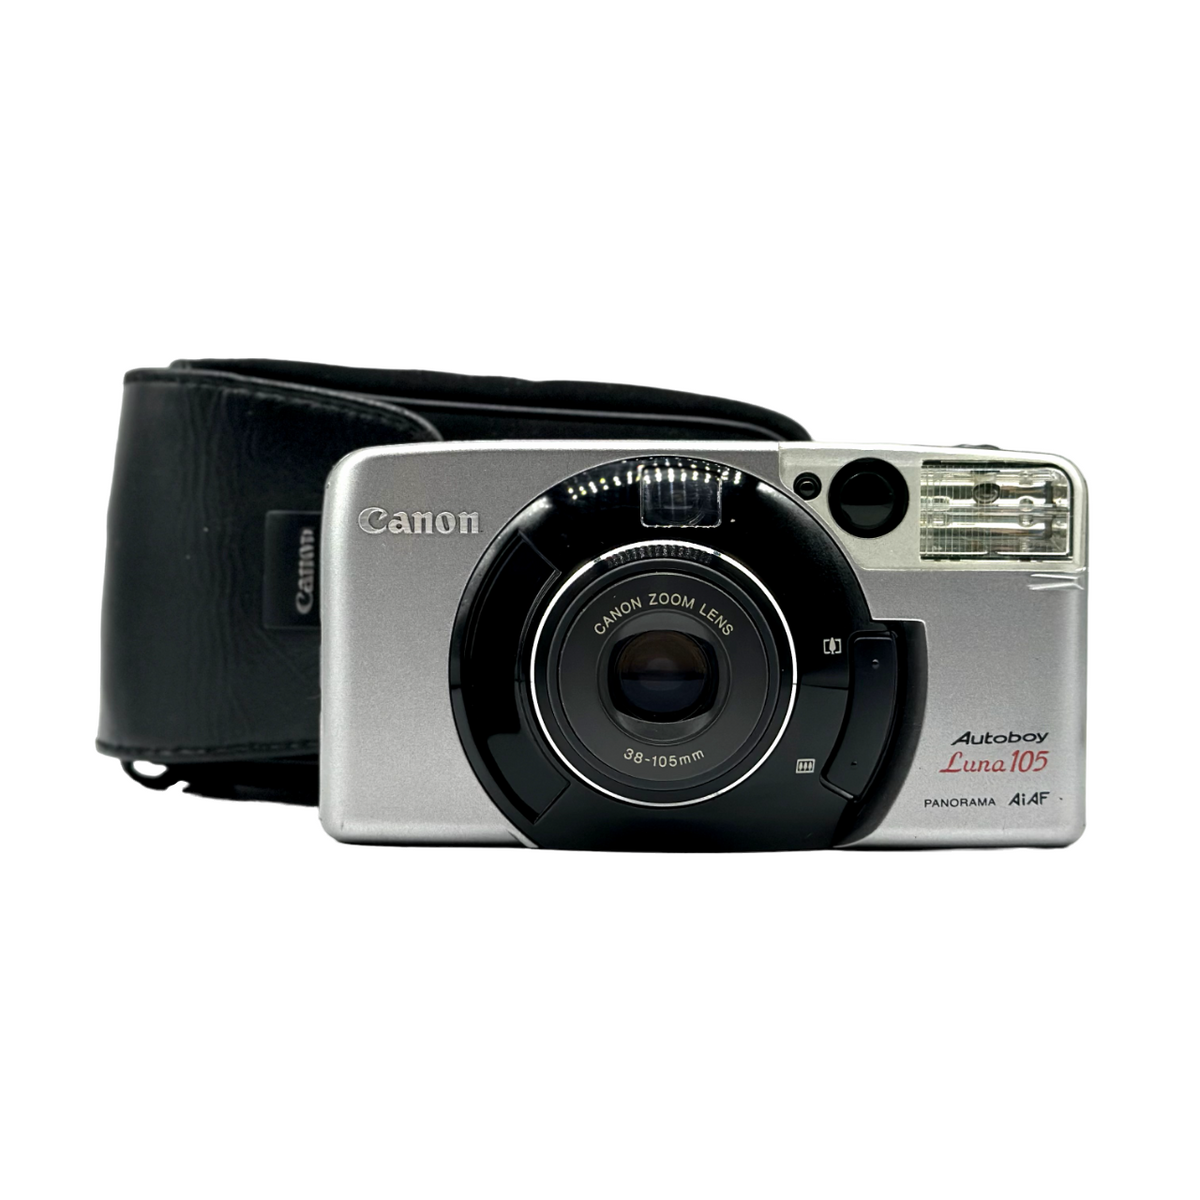 Canon Autoboy Luna 105 Panorama | CoolC Camera – Coolc Camera